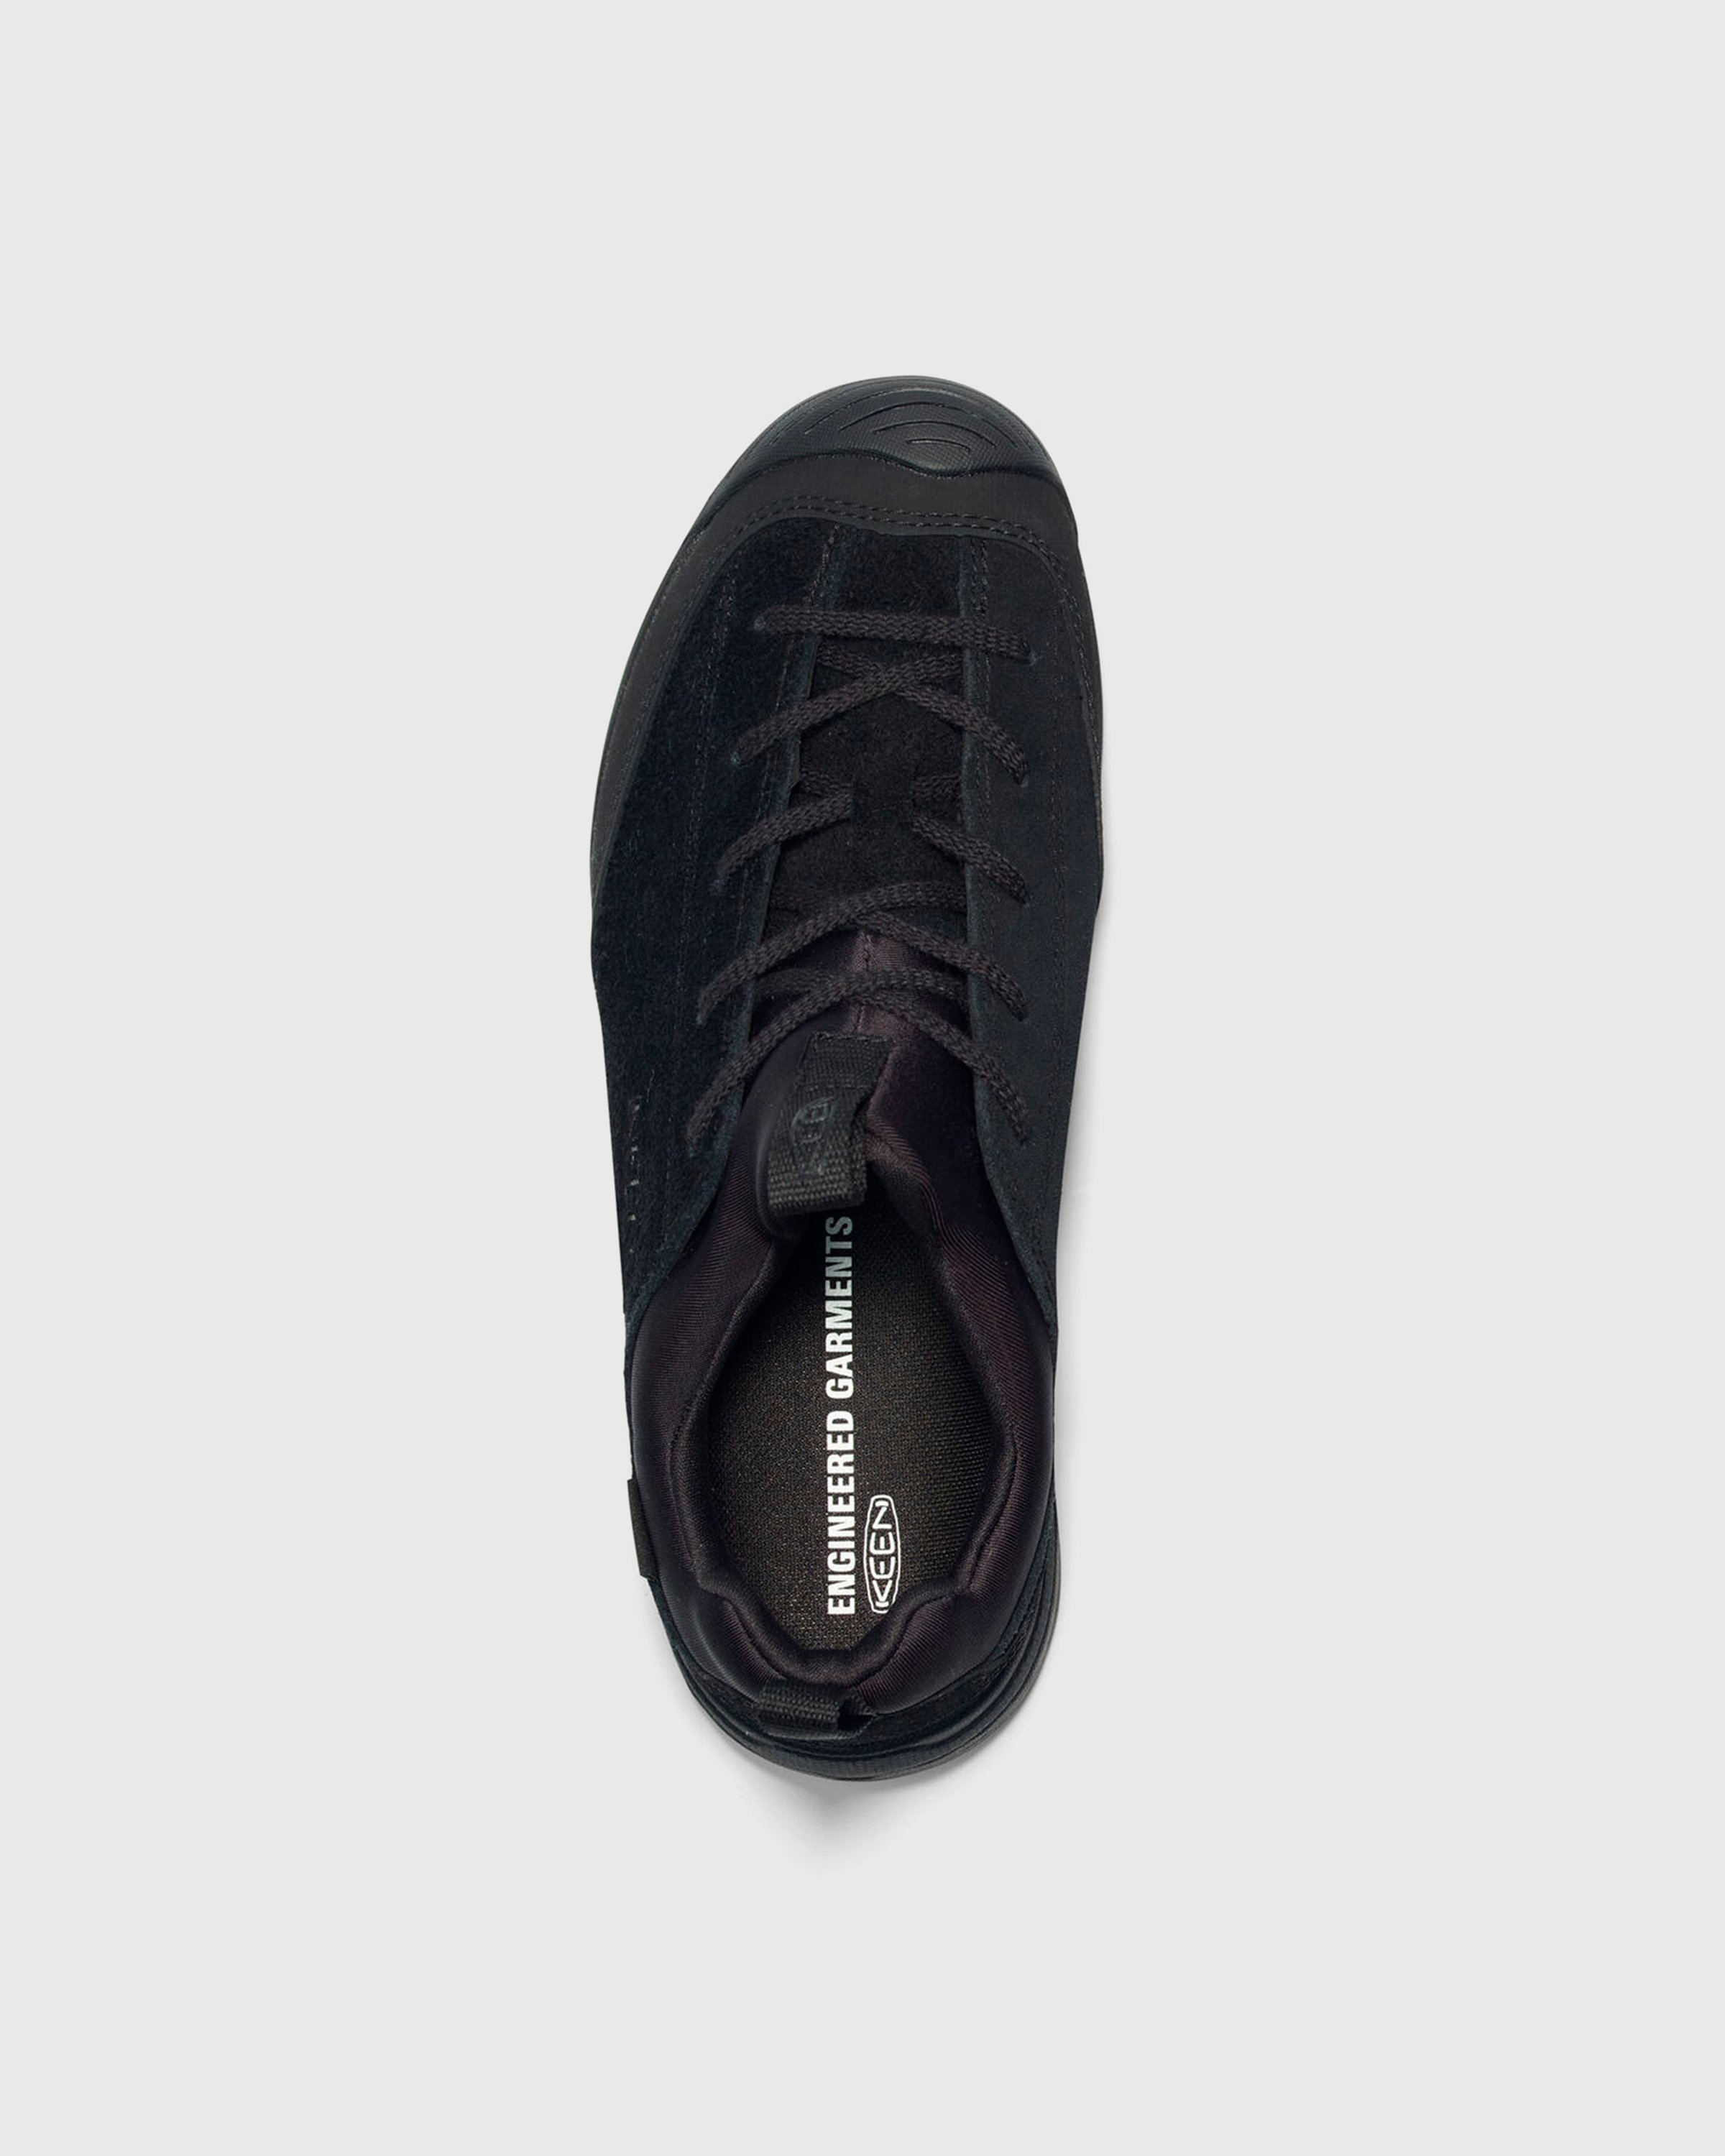 Keen x Engineered Garments - JASPER II EG MOC WP Black - Footwear - Black - Image 4